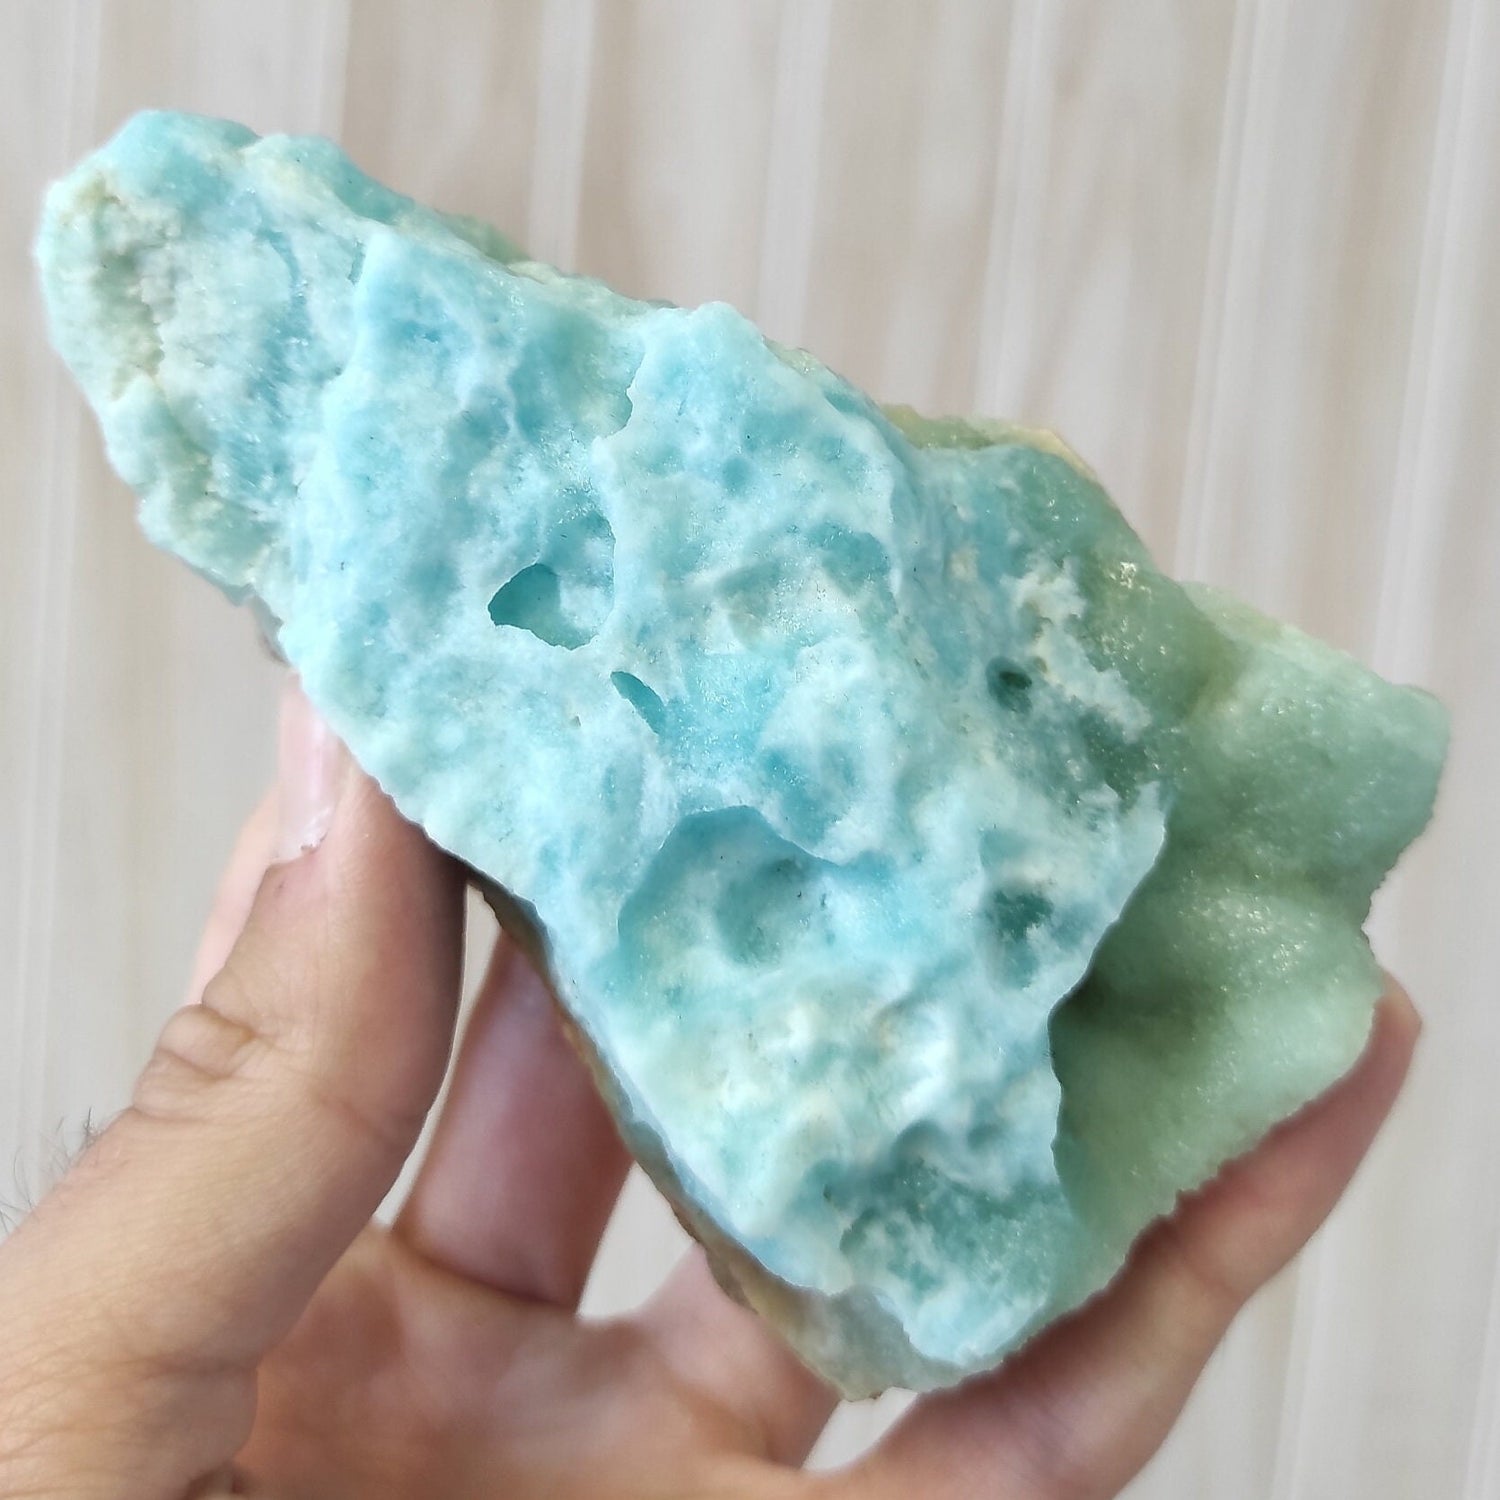 328g Smithsonite Mineral Specimen - Blue Smithsonite Crystal - Natural Crystal Specimens - Zinc Spar - Raw Smithsonite from Afghanistan